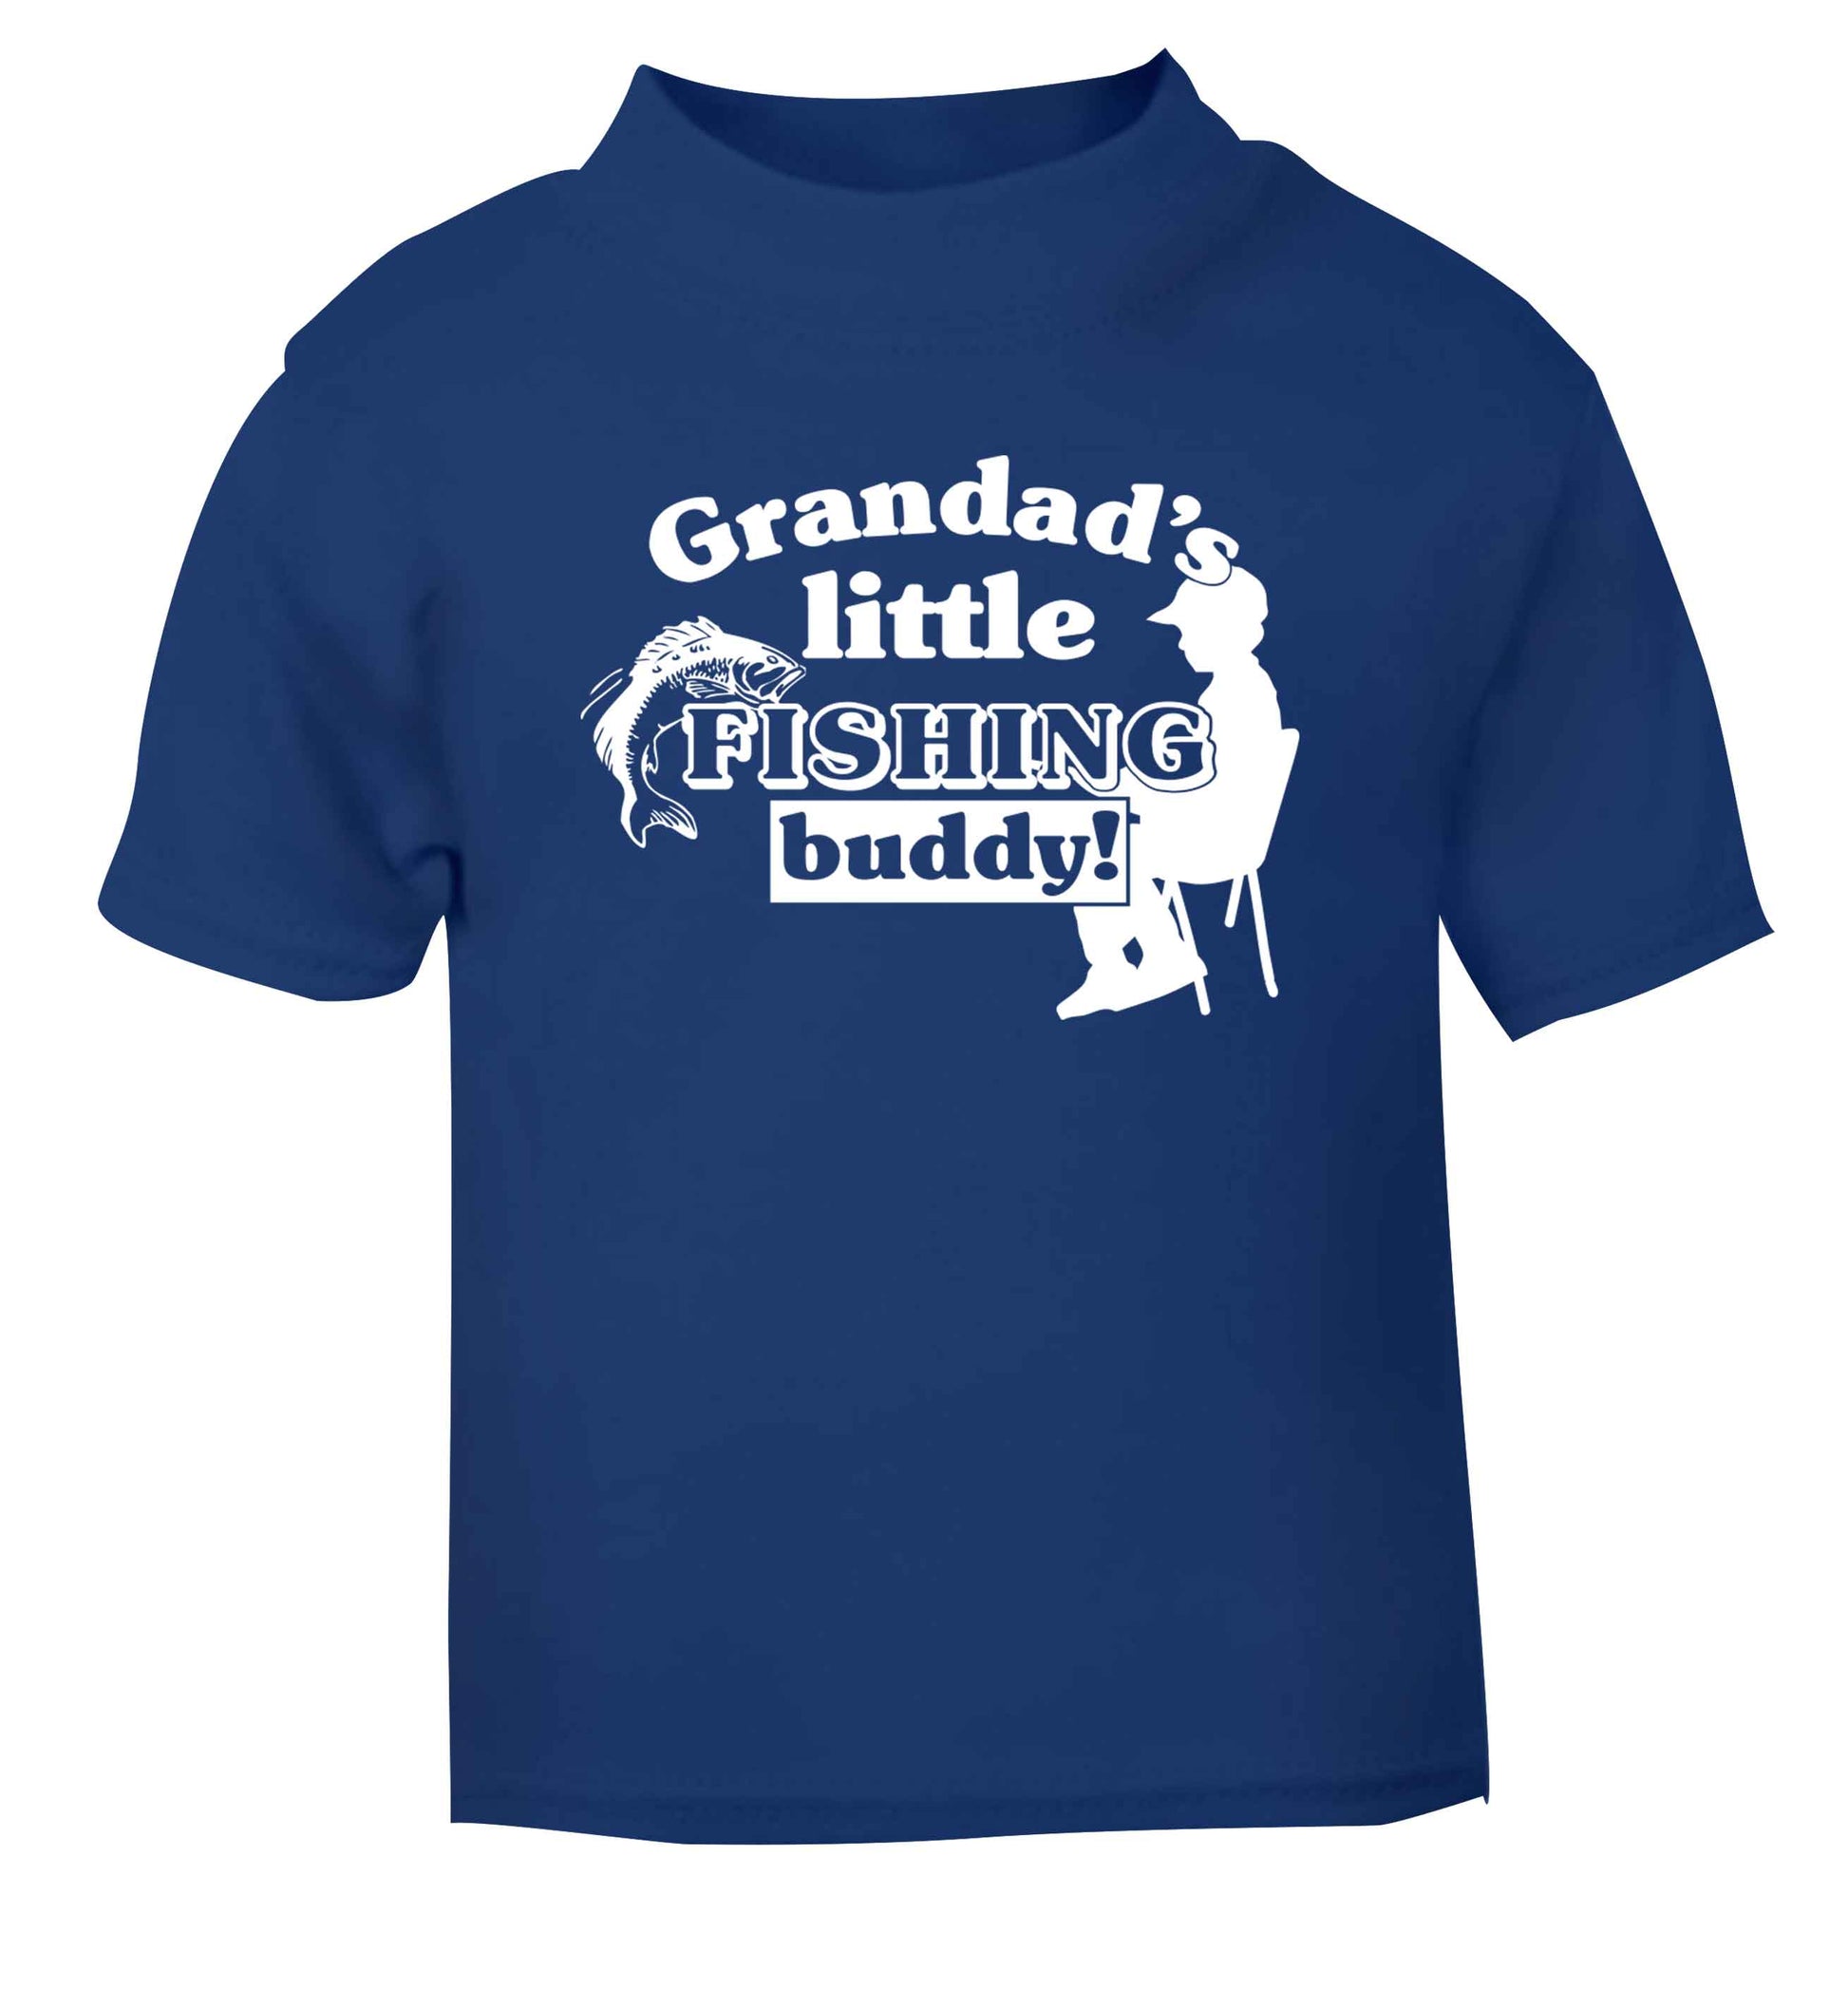 Grandad's little fishing buddy! blue Baby Toddler Tshirt 2 Years